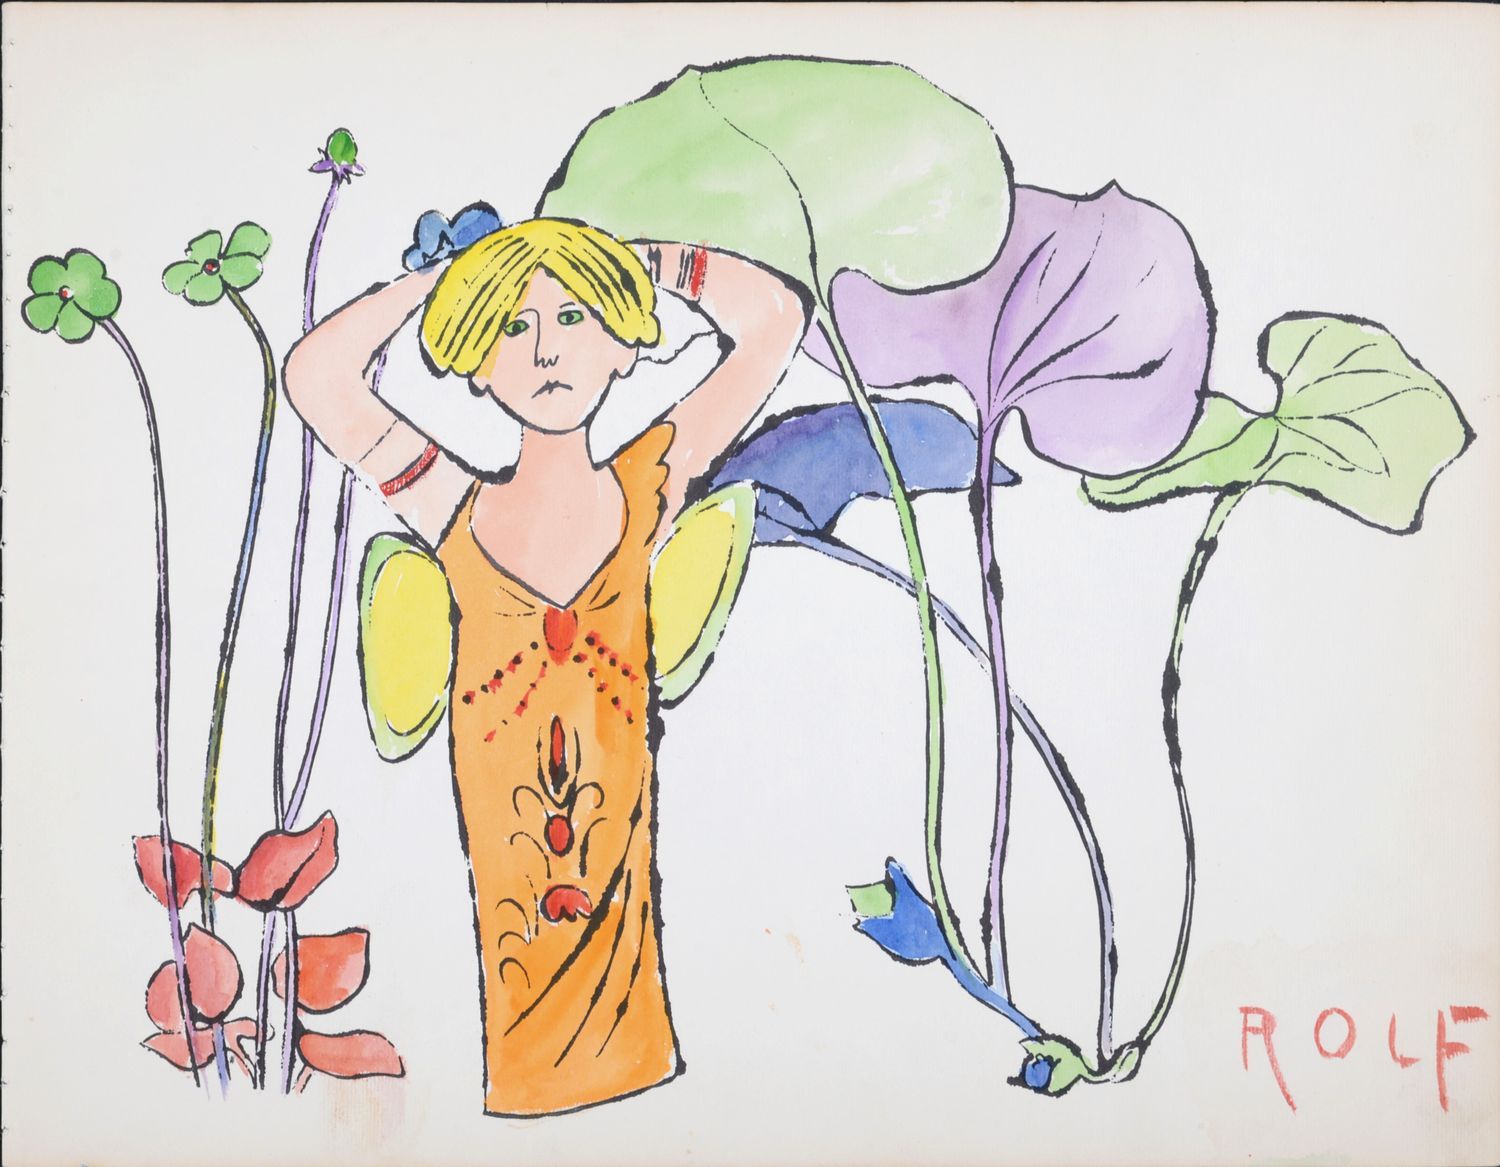 ANDY WARHOL 安迪-沃霍尔(1928-1987)

在我的花园的底部，1956年

纸上胶印平版印刷。水彩手绘，沃霍尔和他的朋友们都有独特的手绘色彩!&hellip;